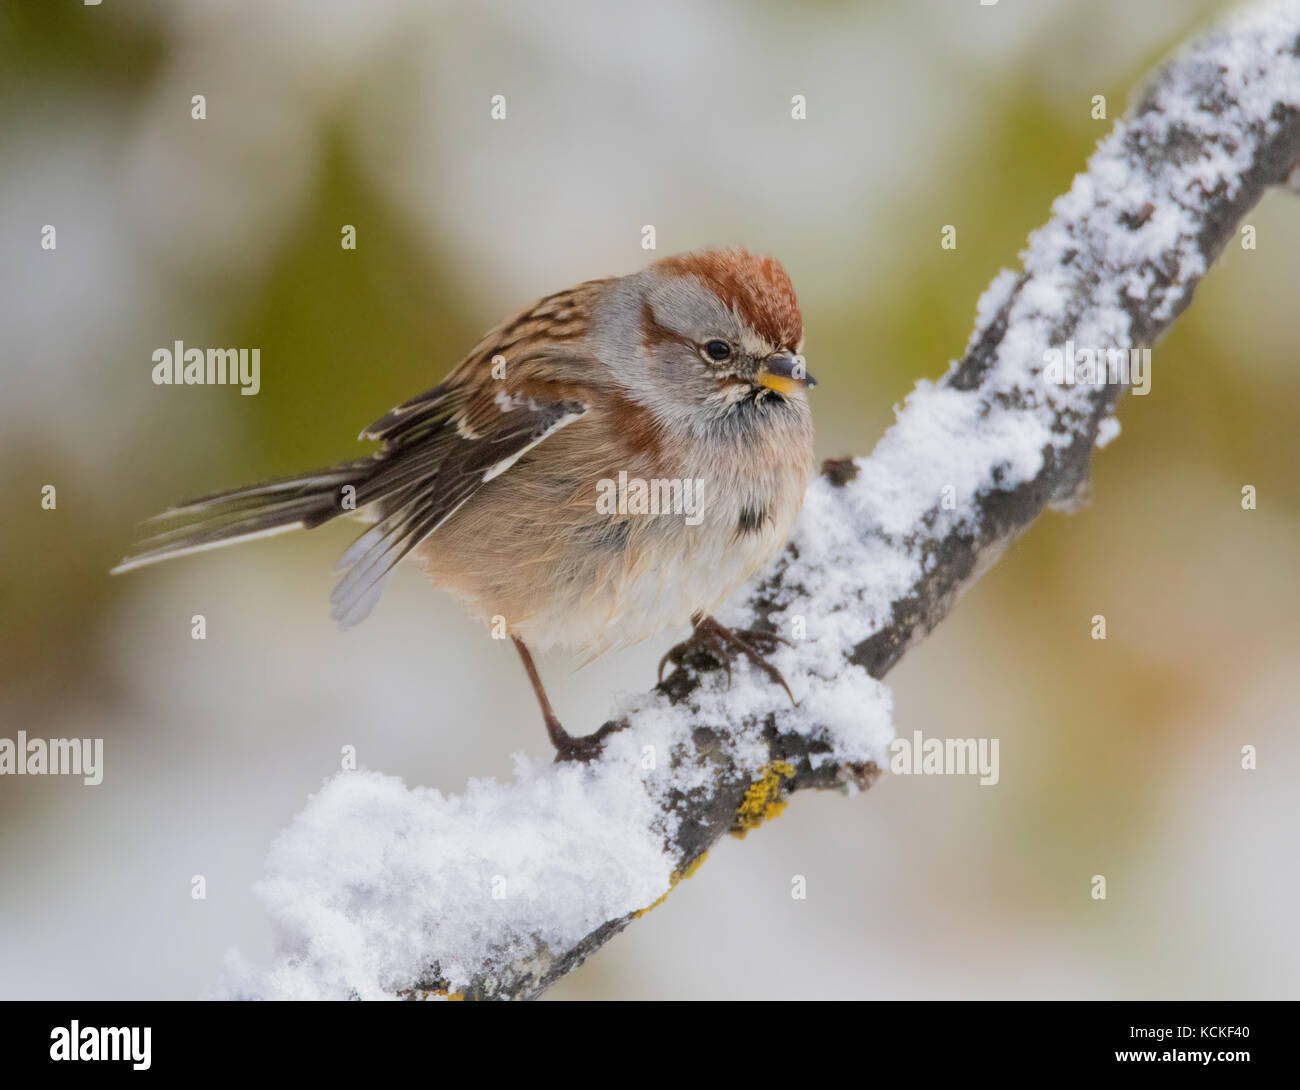 An American Tree Sparrow, Spizella arborea, perched on a log after a snowfall in Autumn, in Saskatoon, Saskatchewan, Canada Stock Photo